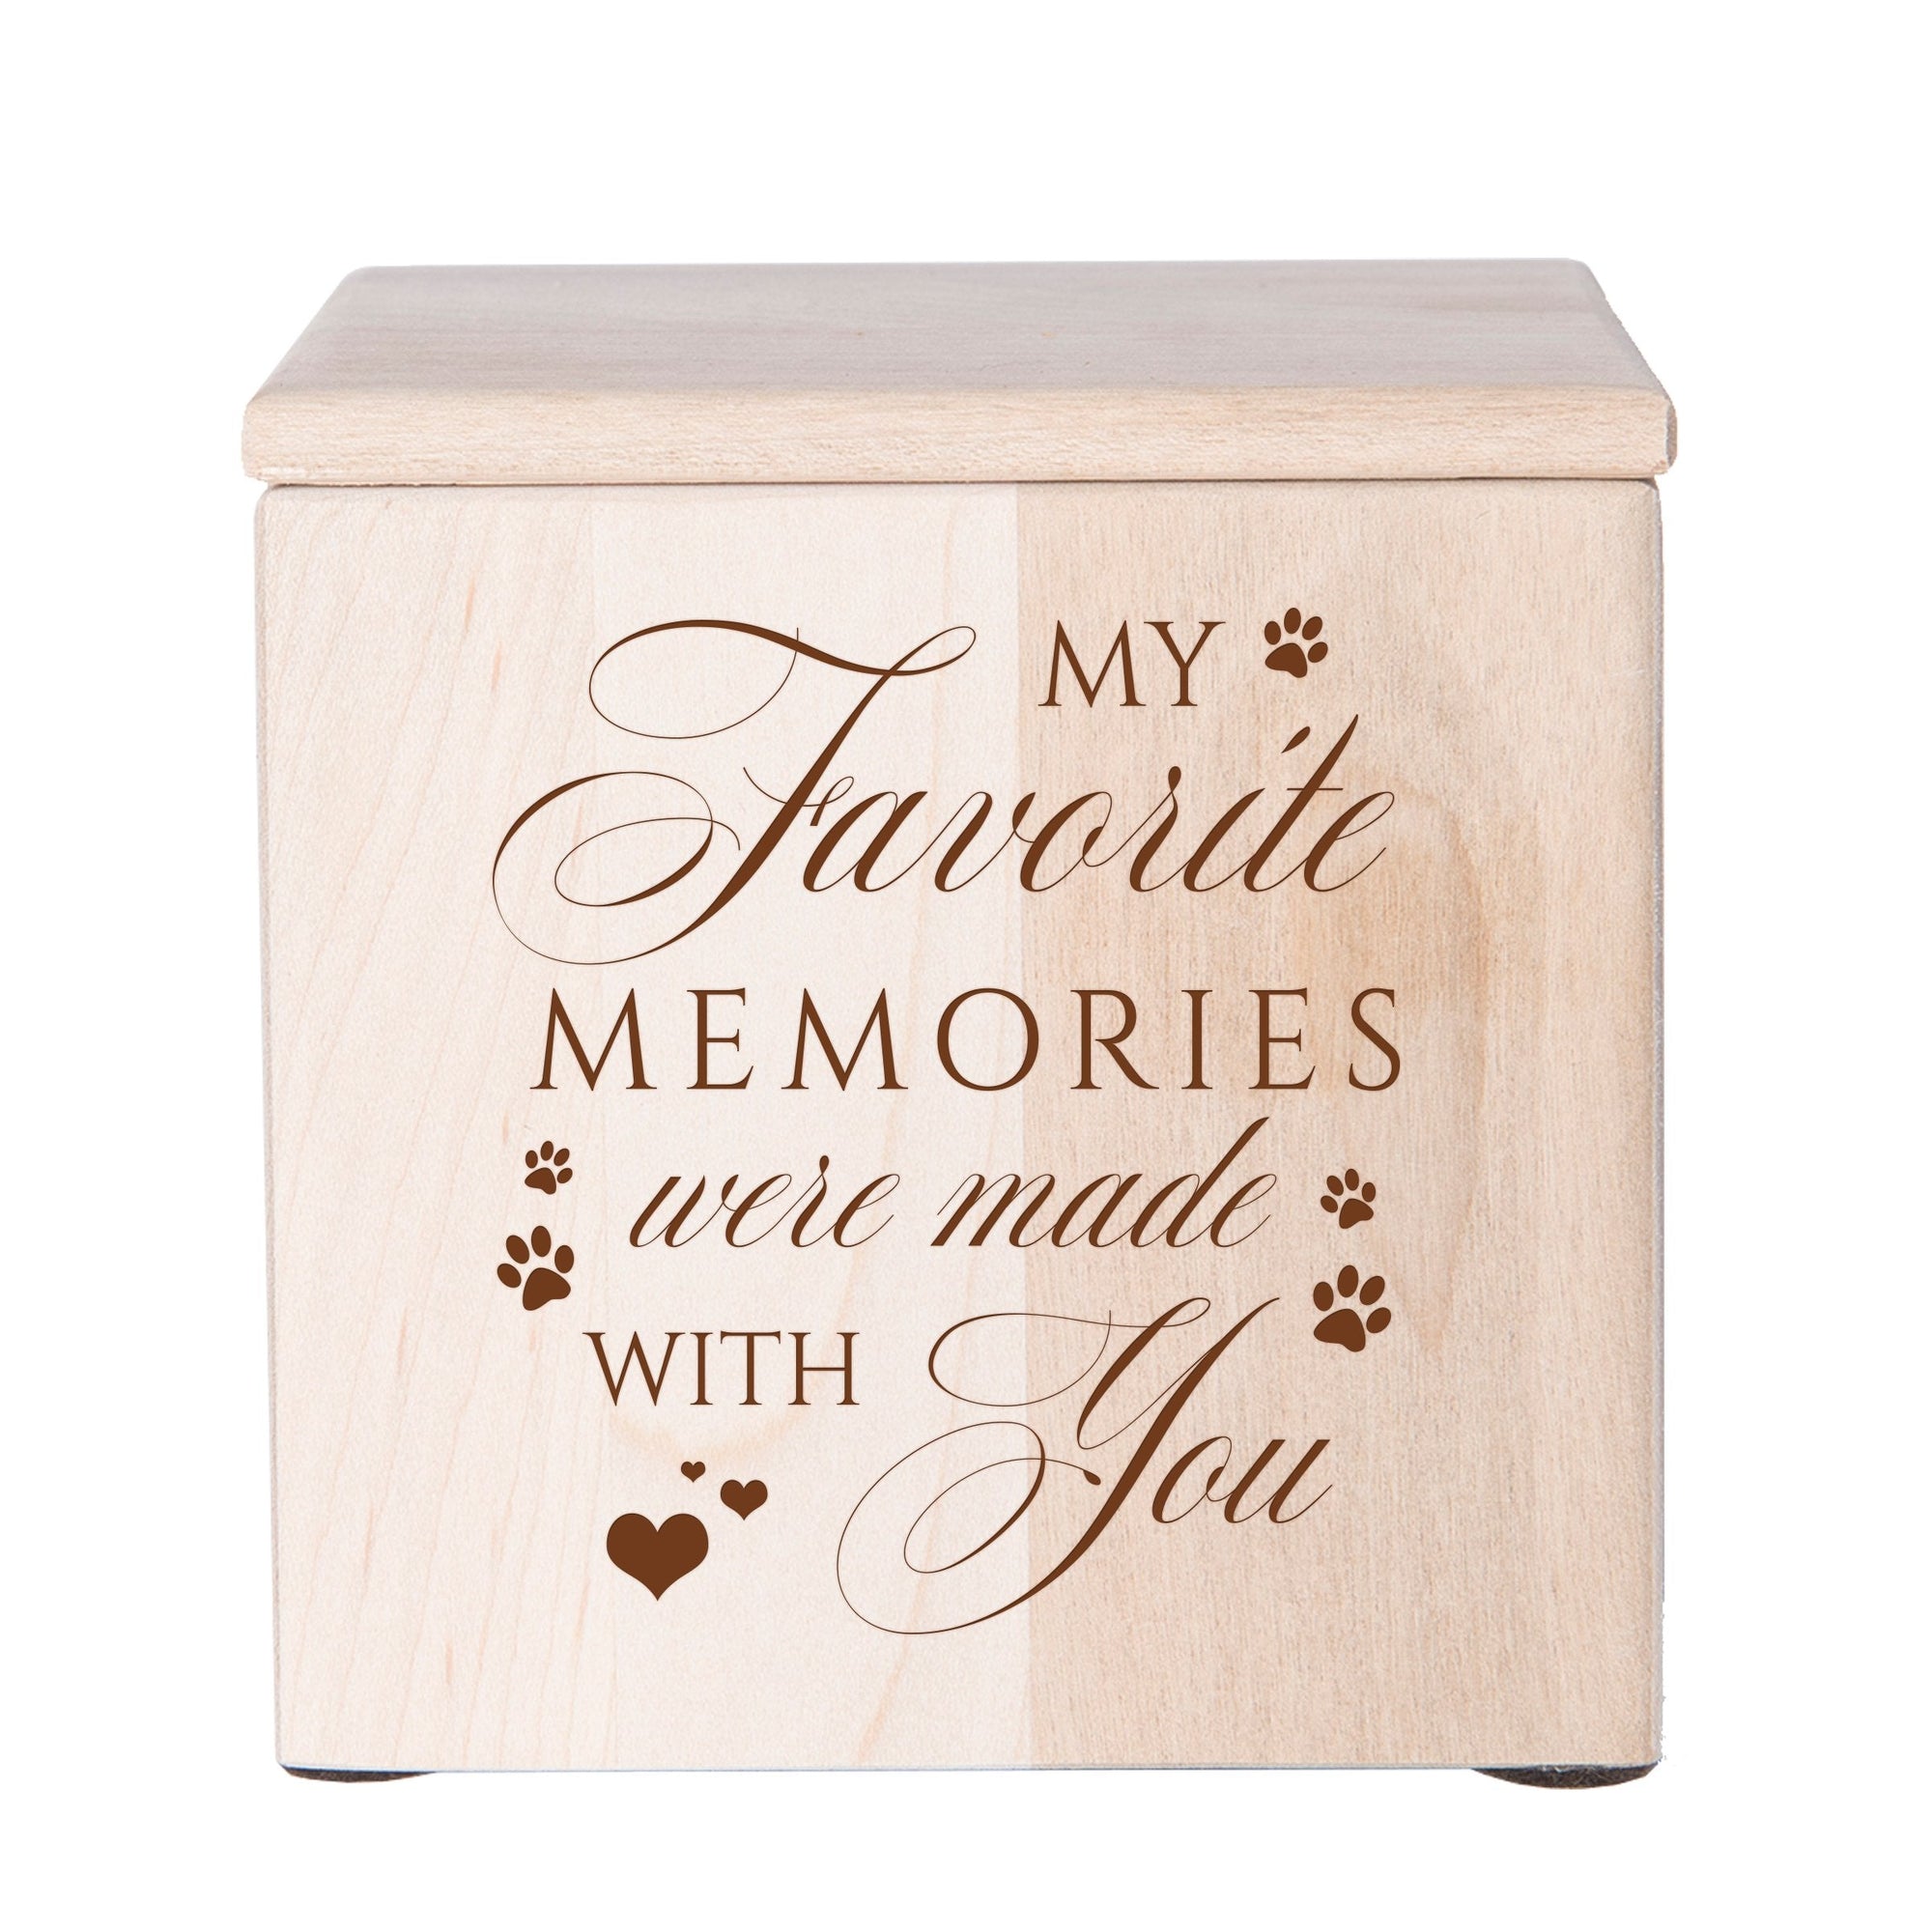 Maple Pet Memorial 3.5x3.5 Keepsake Urn with phrase "My Favorite Memories"